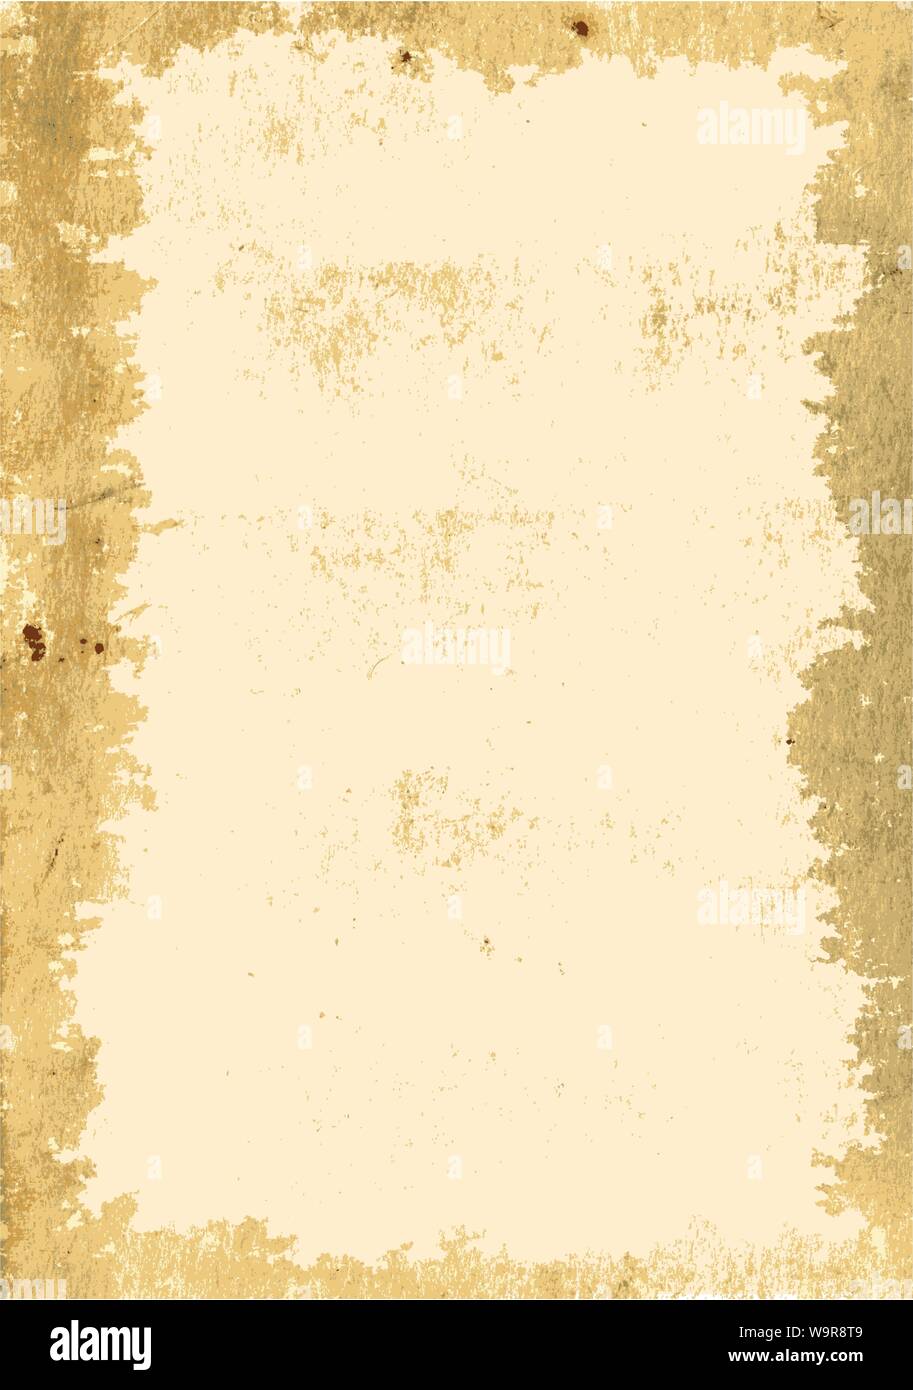 Newspaper Paper Grunge Vintage Old Aged Texture Background Stock  Illustration - Download Image Now - iStock